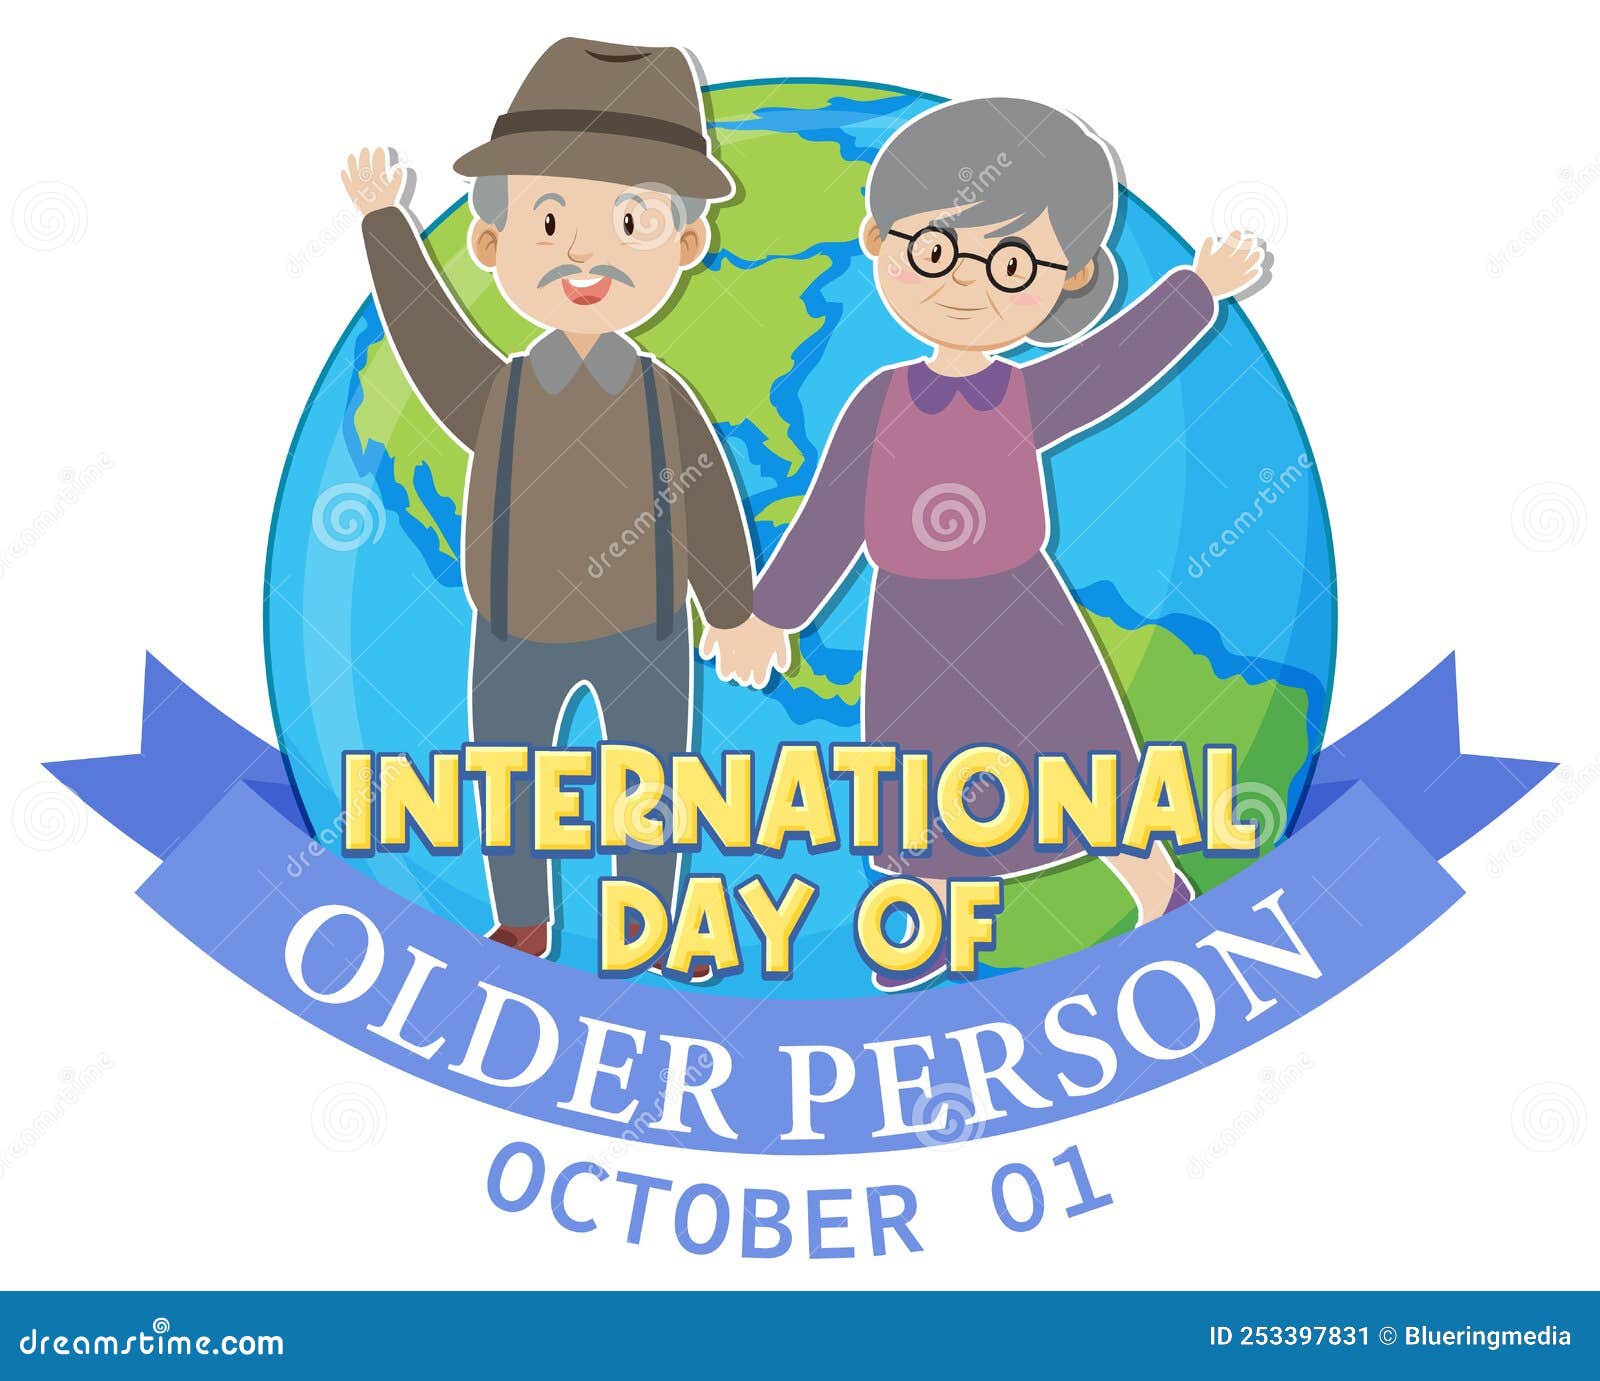 International Day for Older Persons Poster Stock Vector Illustration